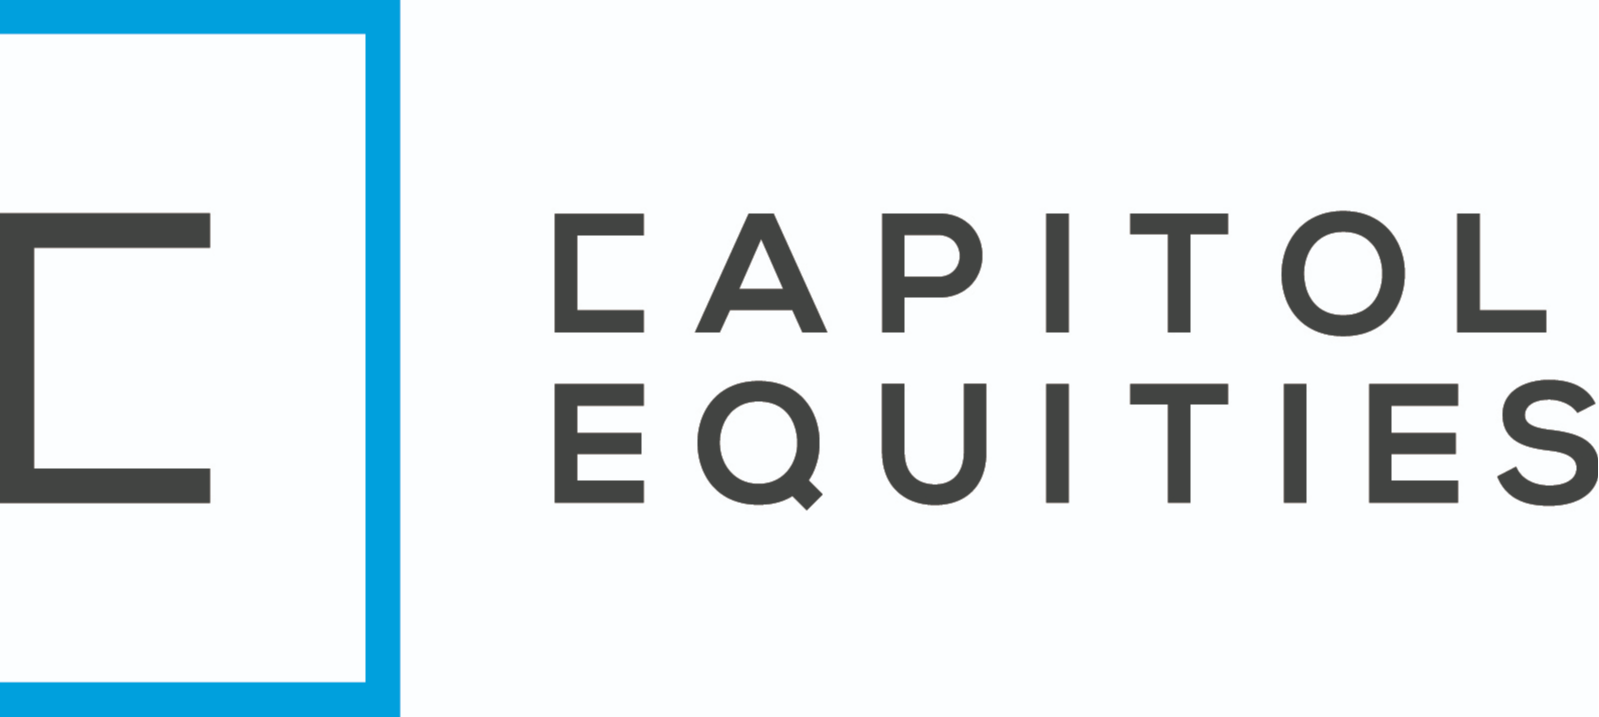 Capital Equities